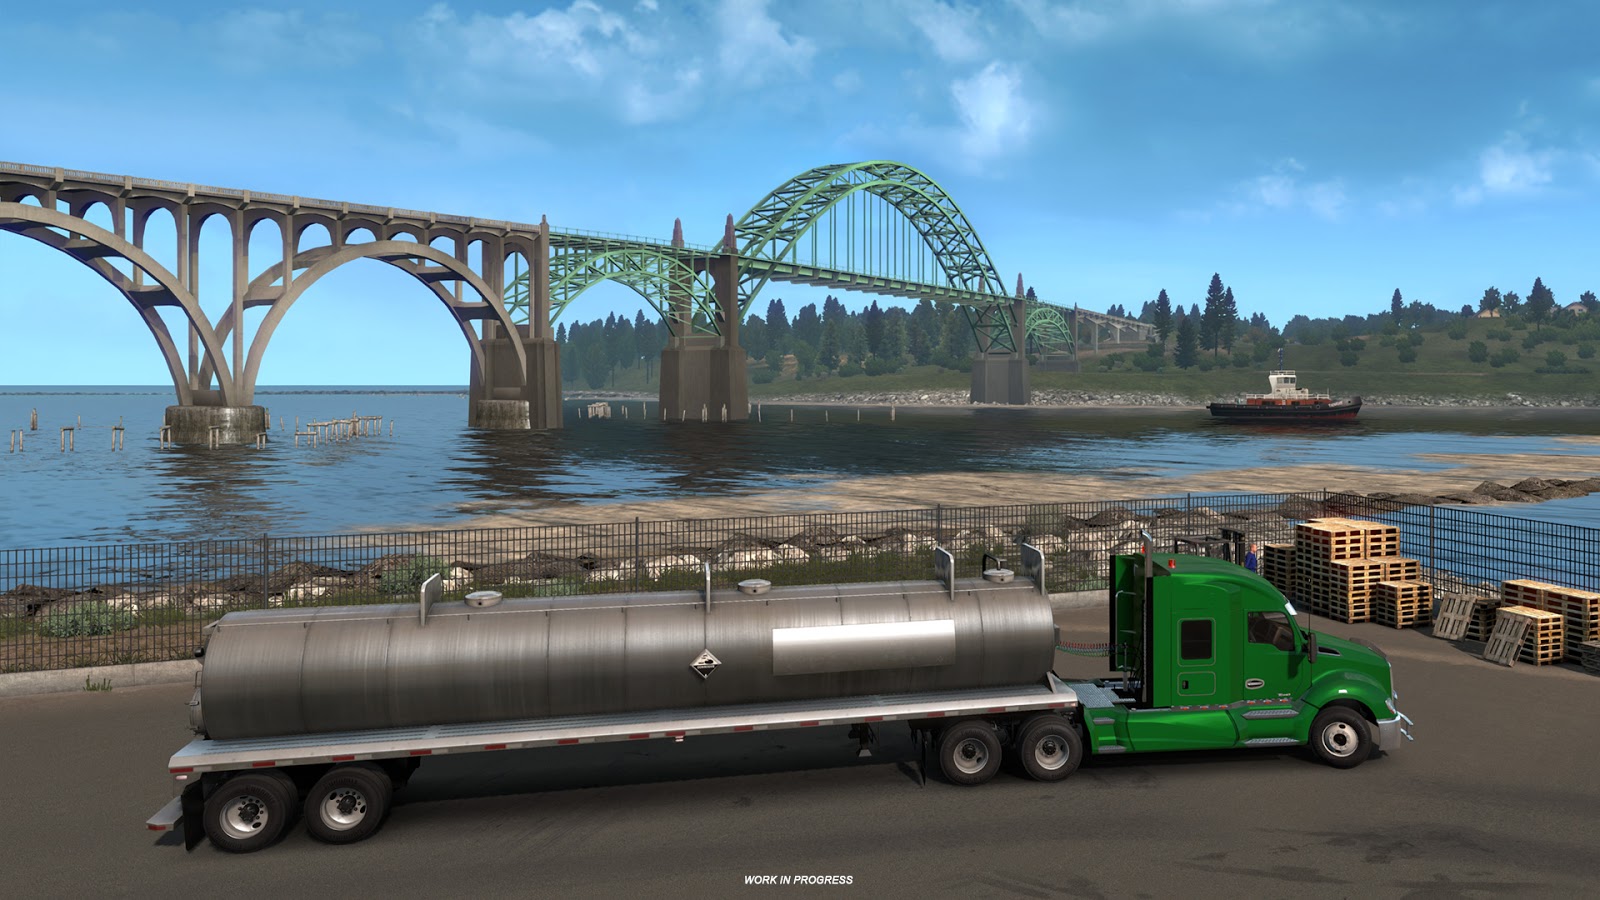 american truck simulator oregon